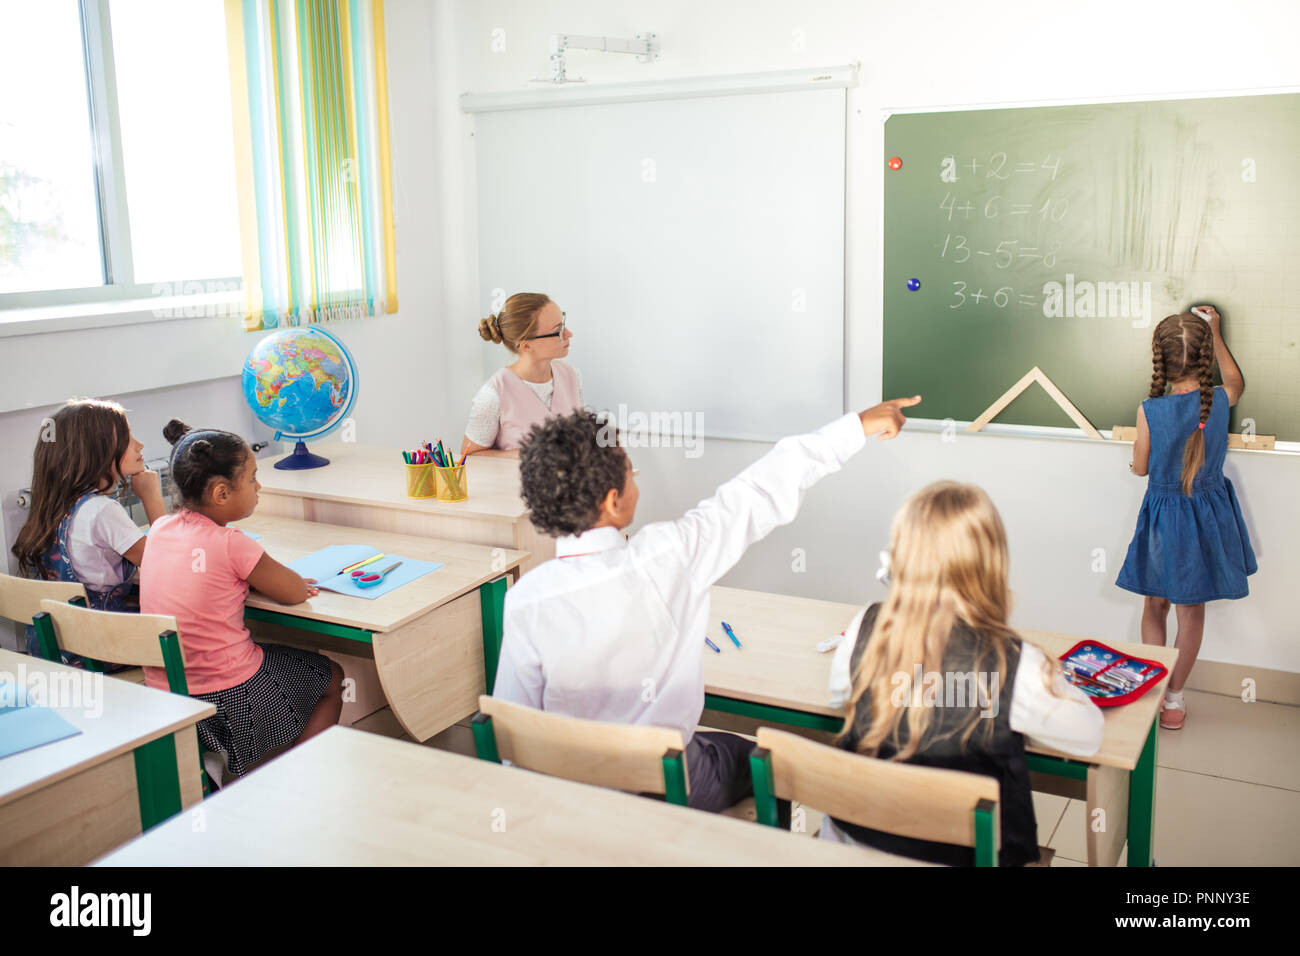 Schoolchild with teacher in classroom. Girl near chalkboard show her homework Stock Photo